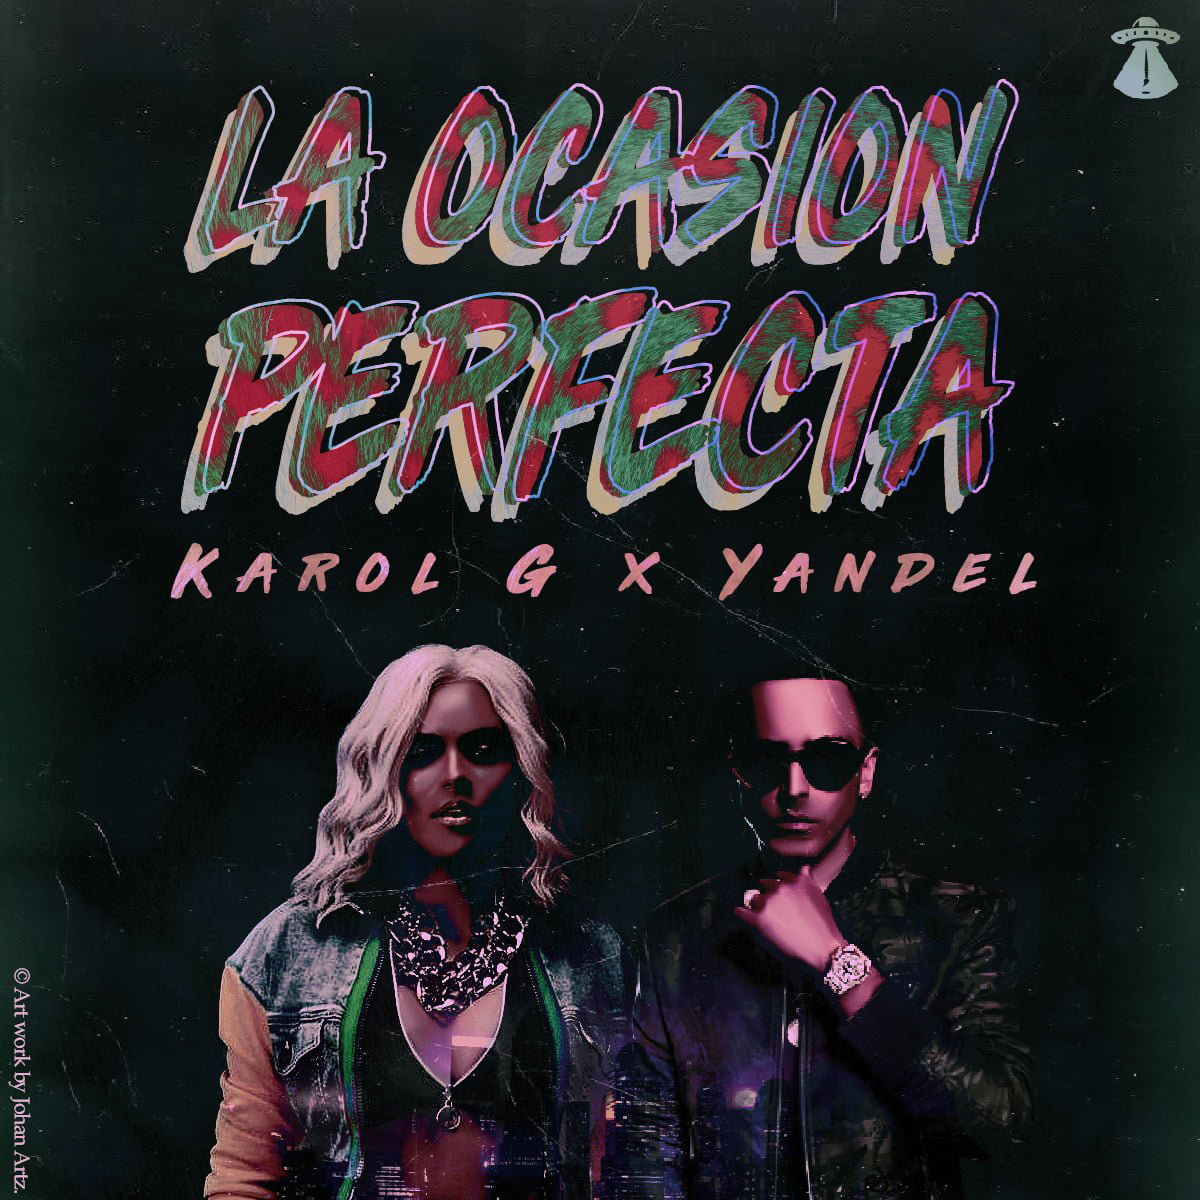 Karol G Feat. Yandel - La Ocasion Perfecta.mp3